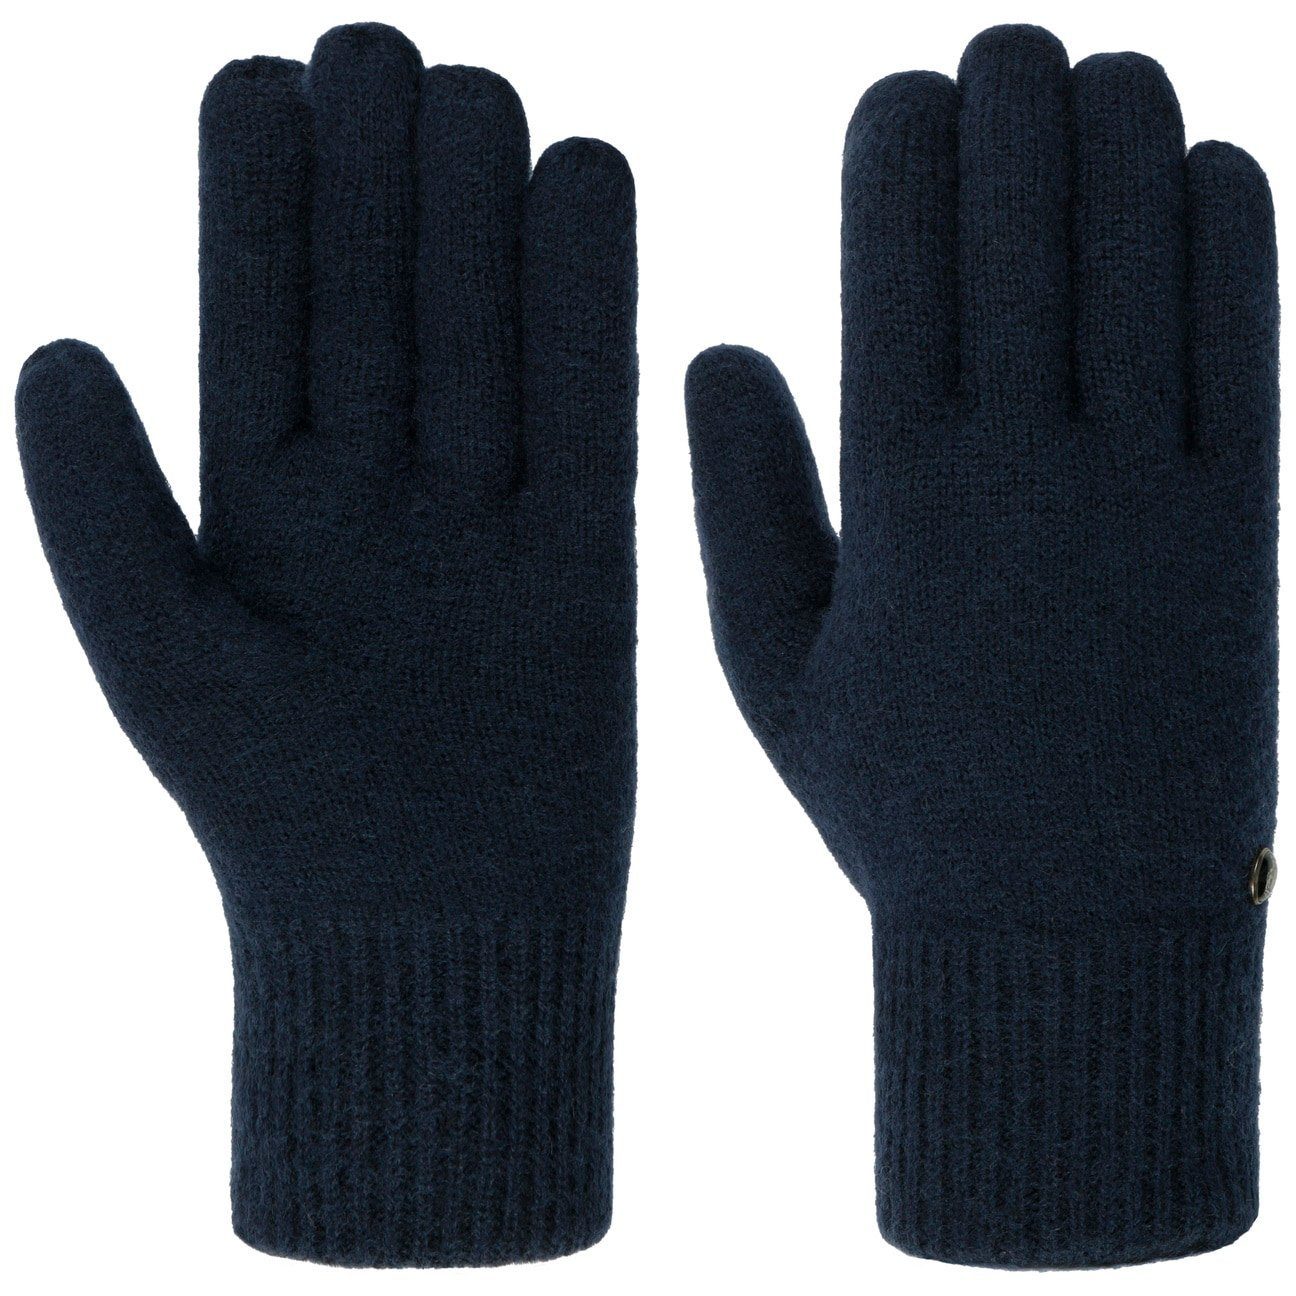 Roeckl Strickhandschuhe Handschuhe dunkelblau